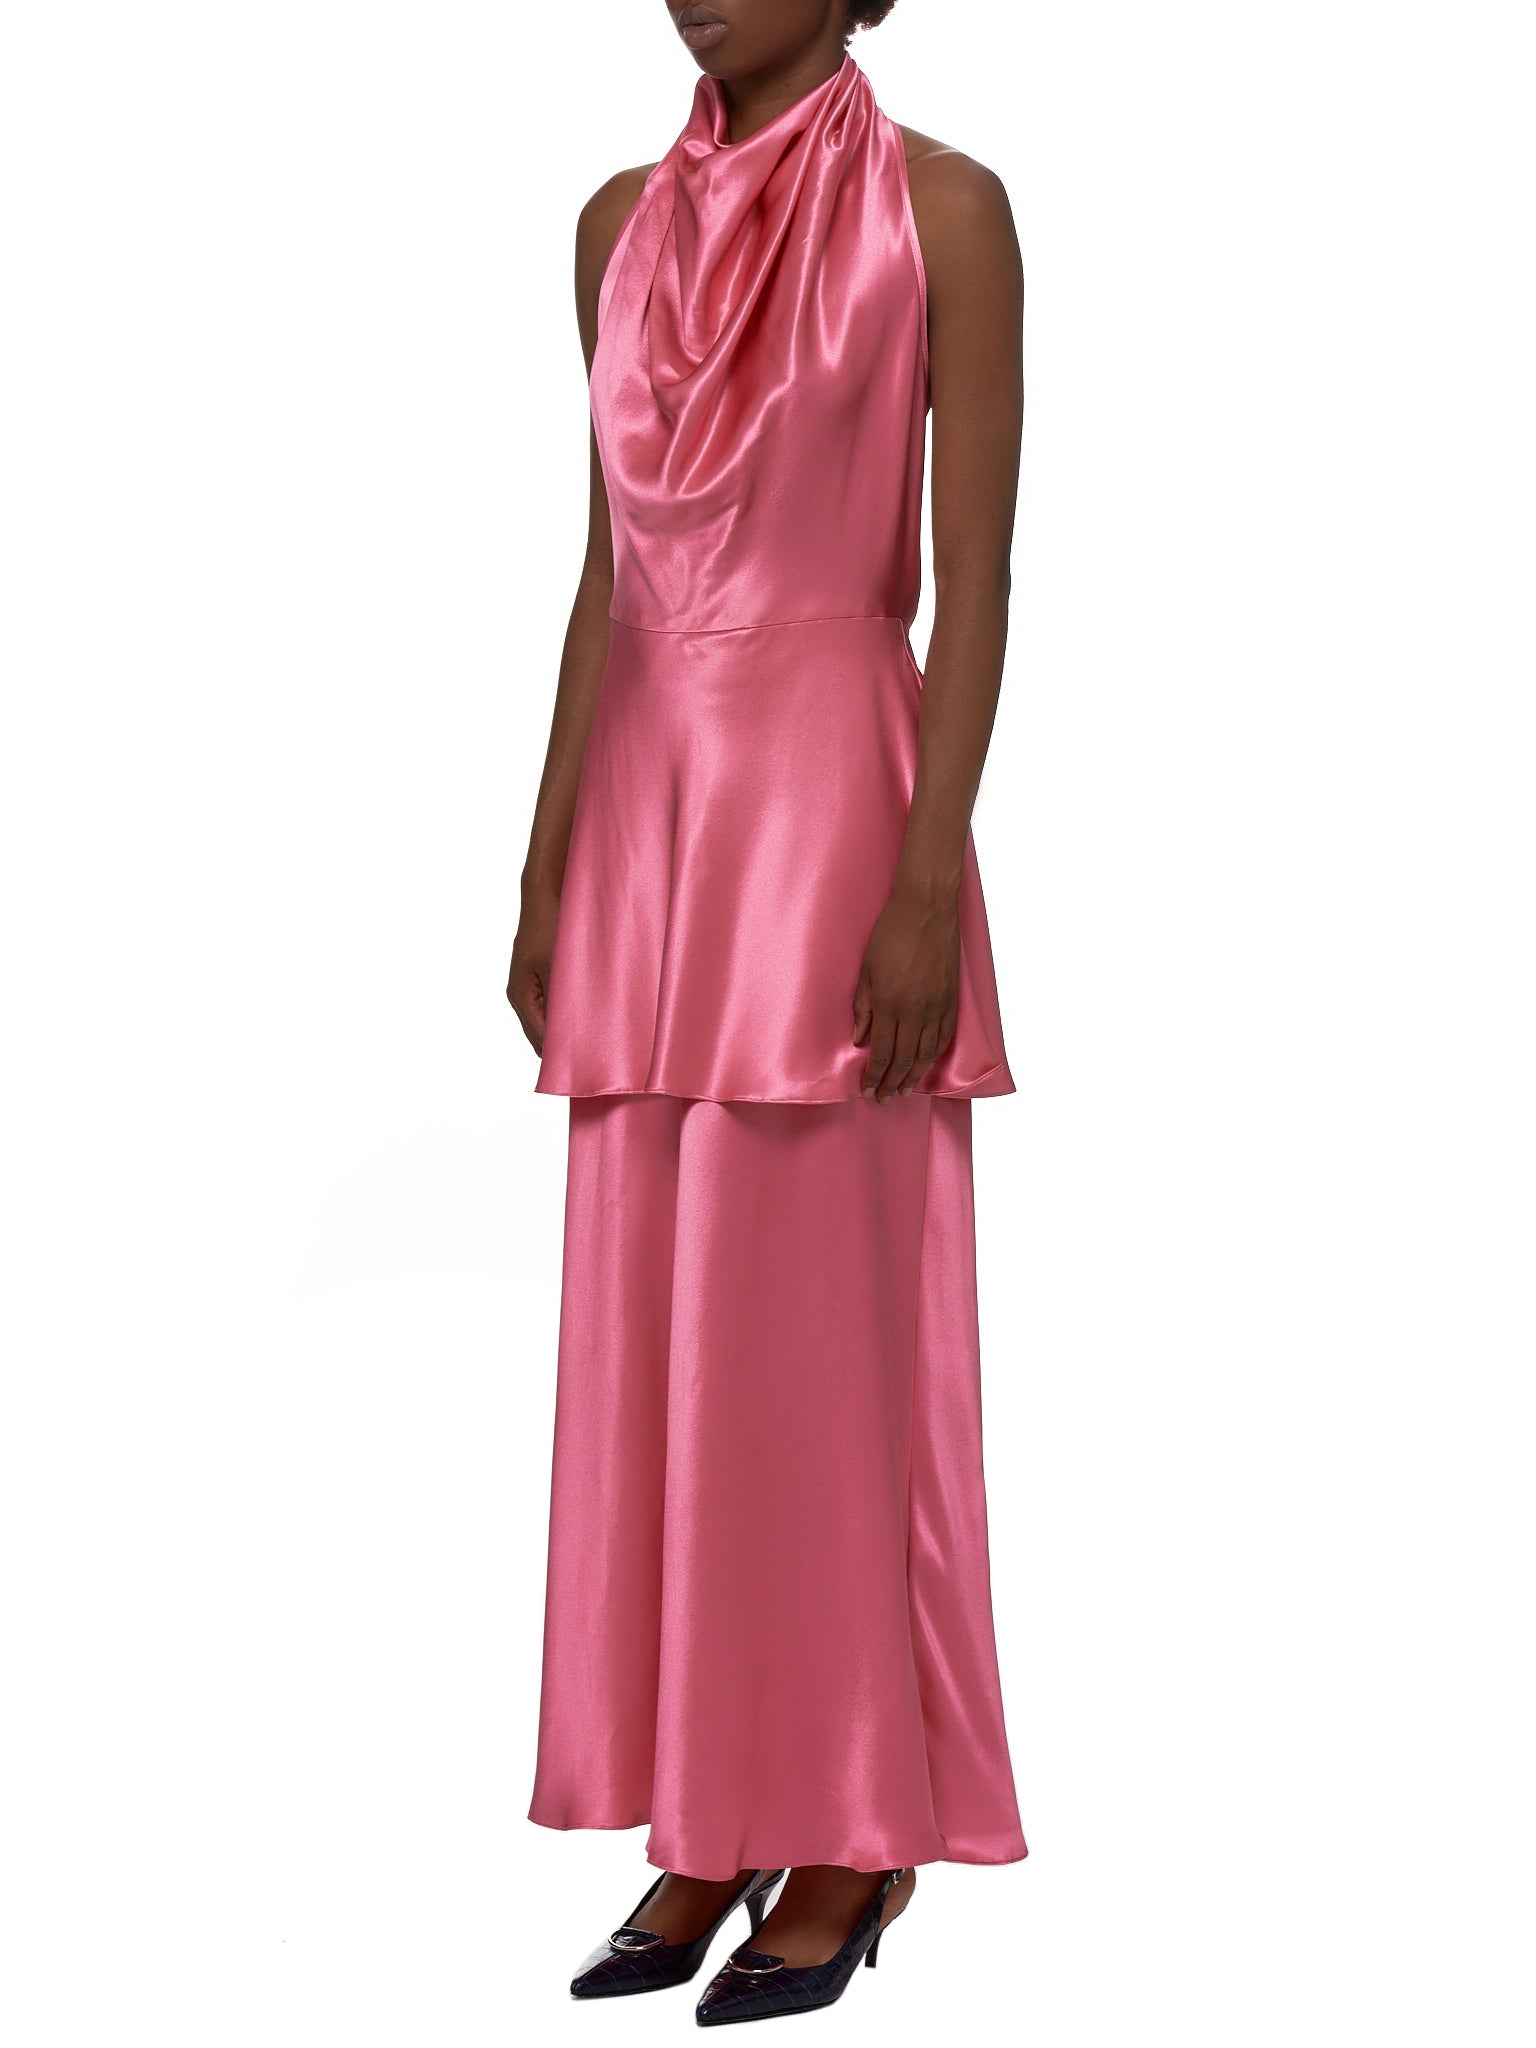 Rowen Rose Dress - Hlorenzo Side